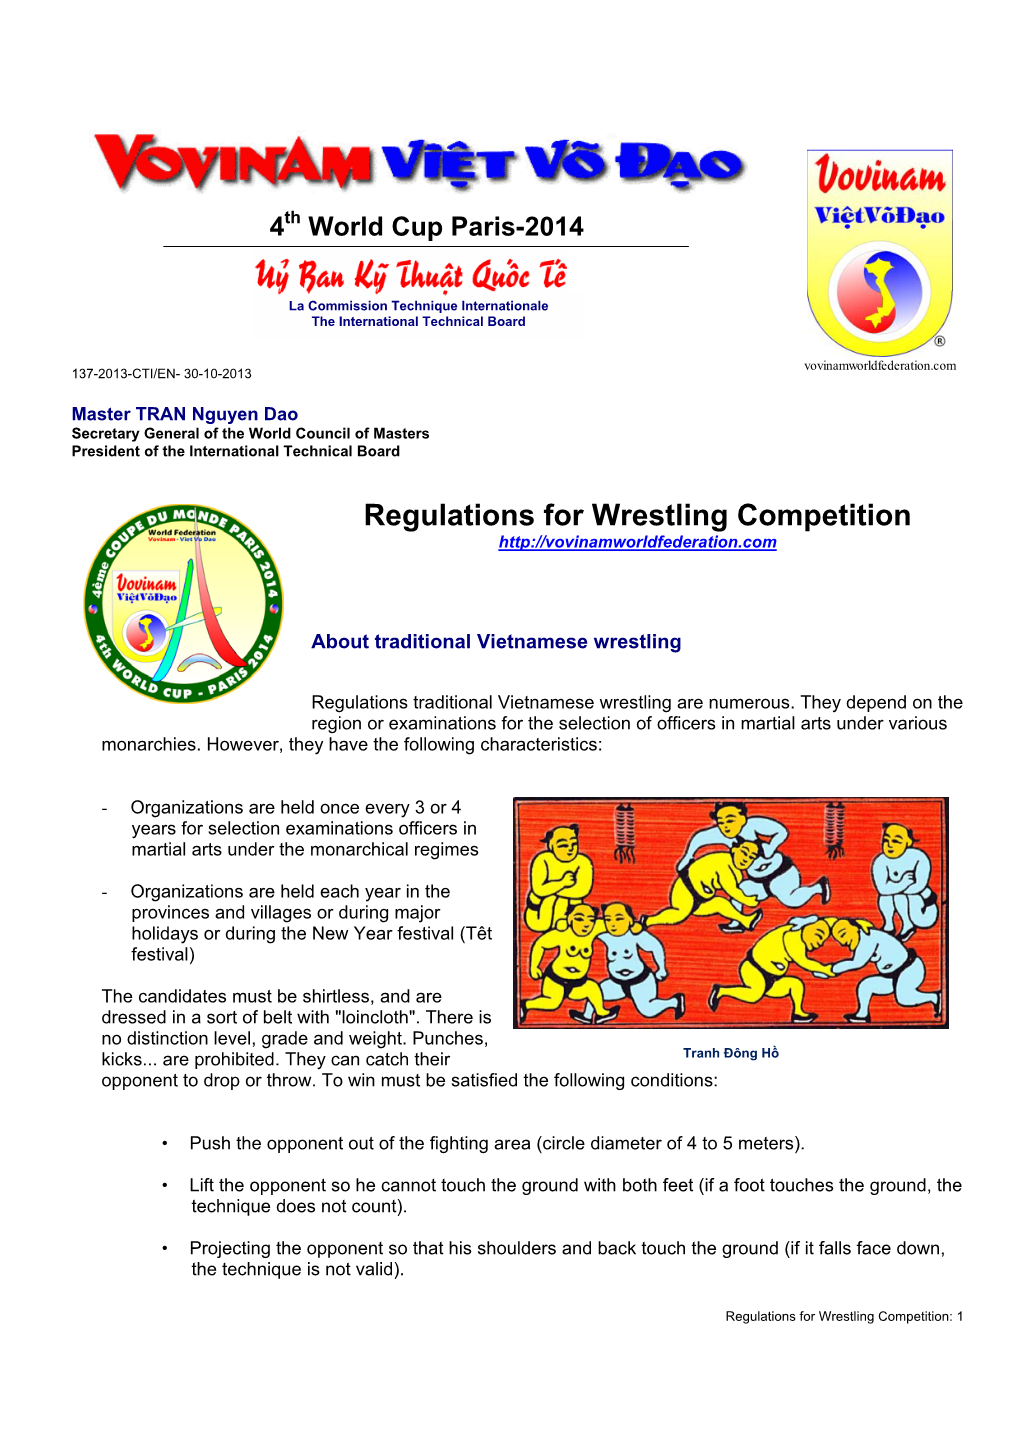 Regulations for Wrestling Competition